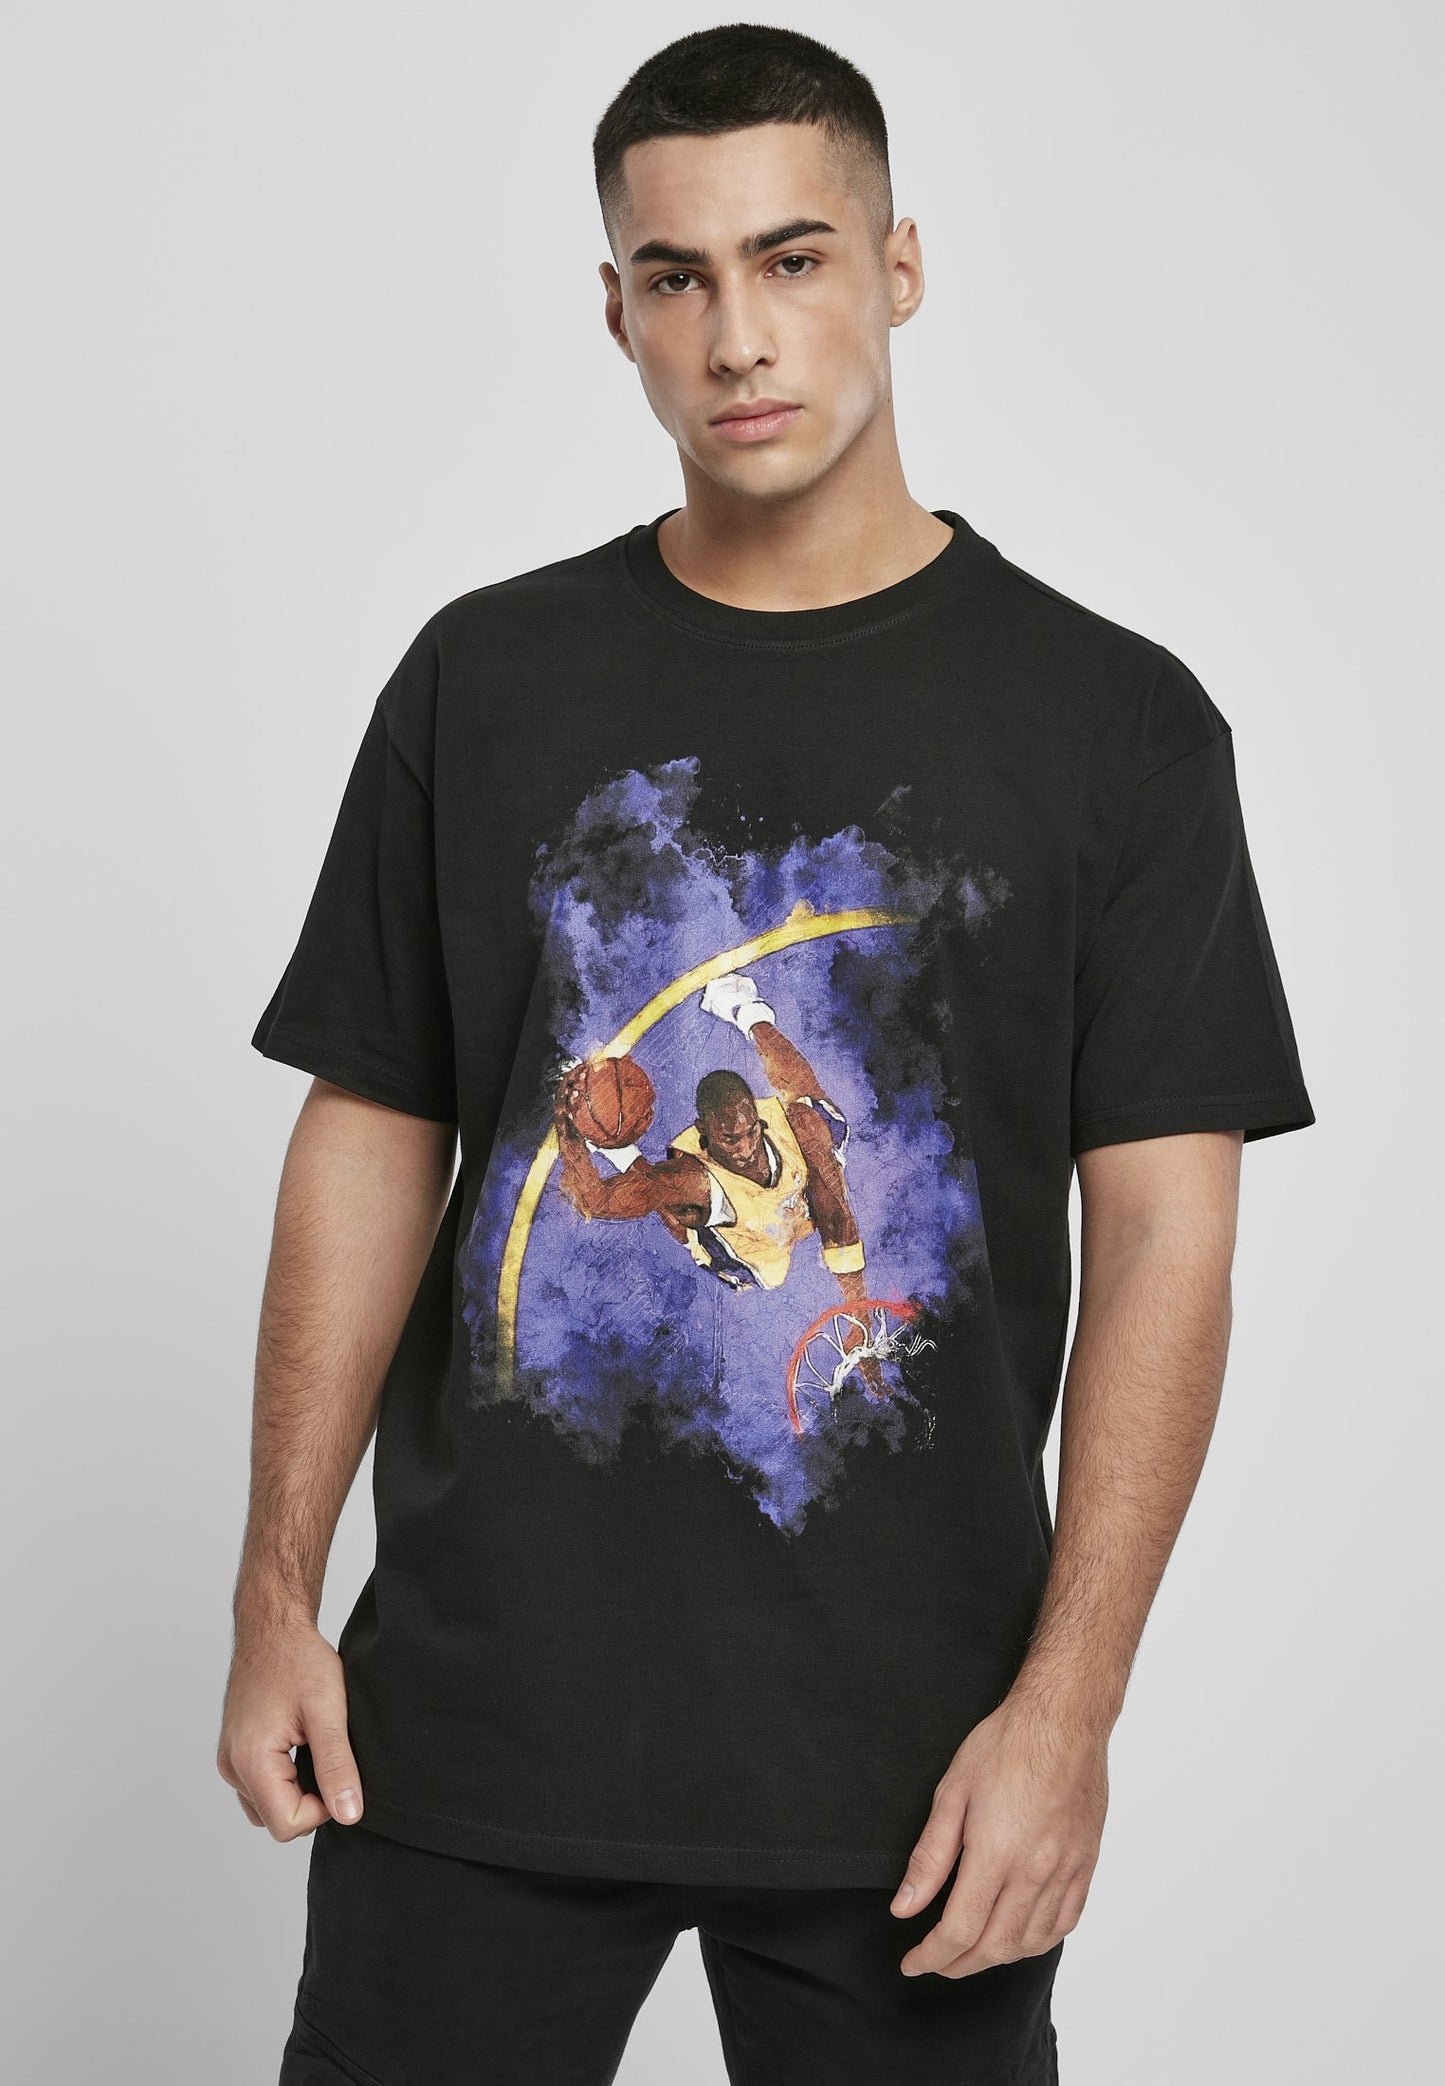 Basketball Clouds 2.0 Oversize T-Shirt Kobe Bryant Thema in Schwarz-Street-& Sportswear Aurich - Shirts & Tops